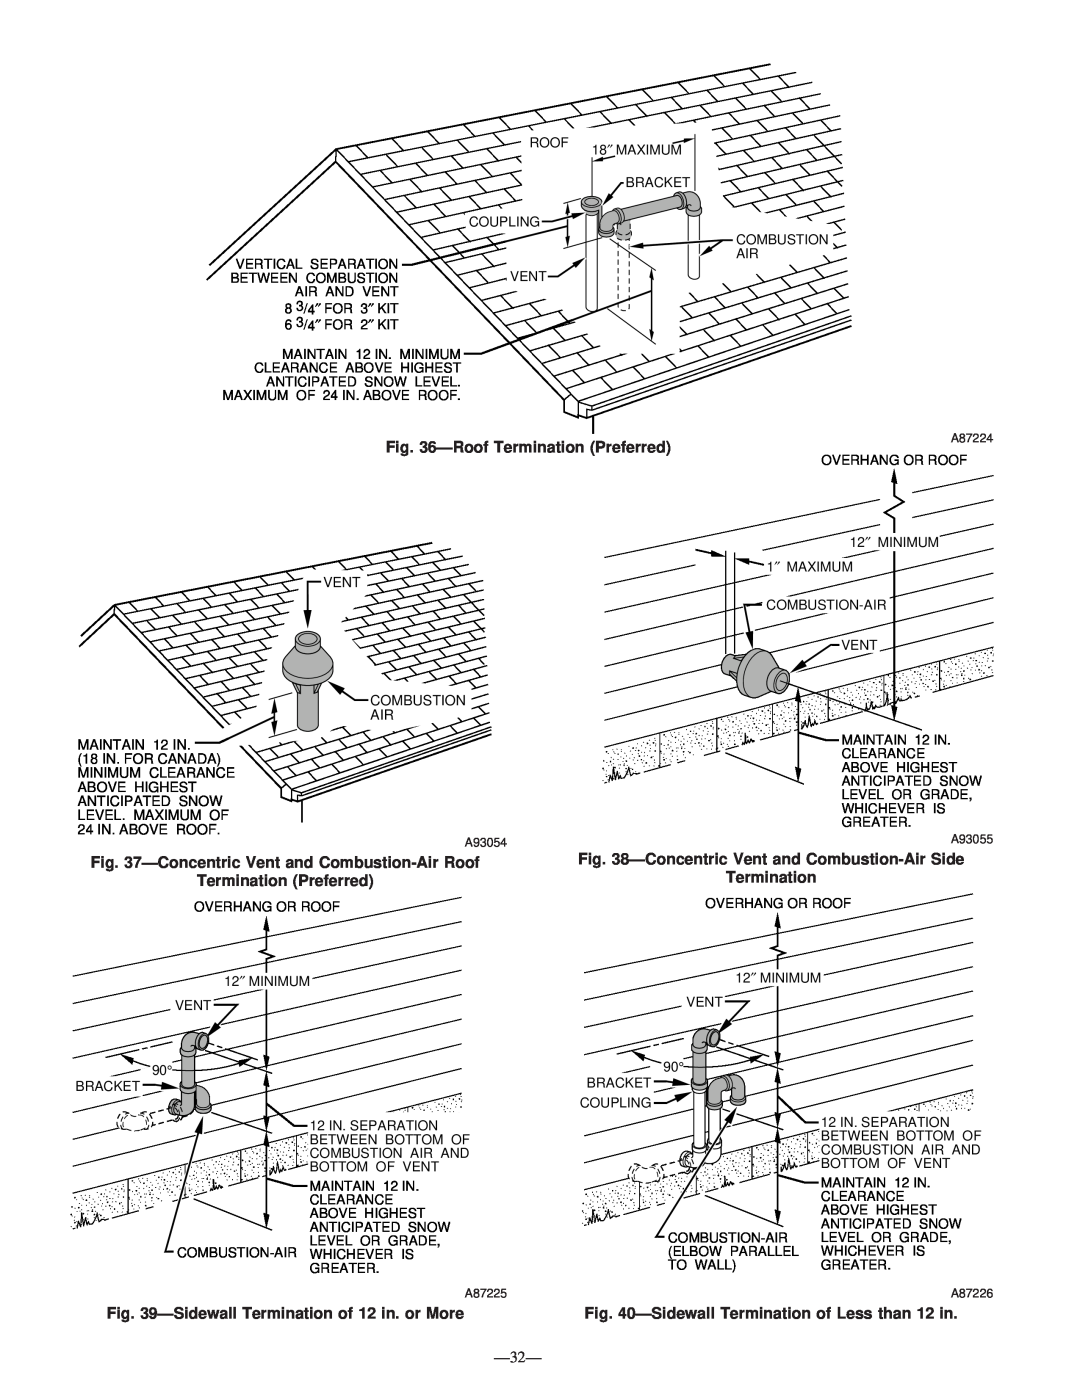 Bryant 340MAV RoofTermination Preferred, ConcentricVent and Combustion-AirRoof, ConcentricVent and Combustion-AirSide 